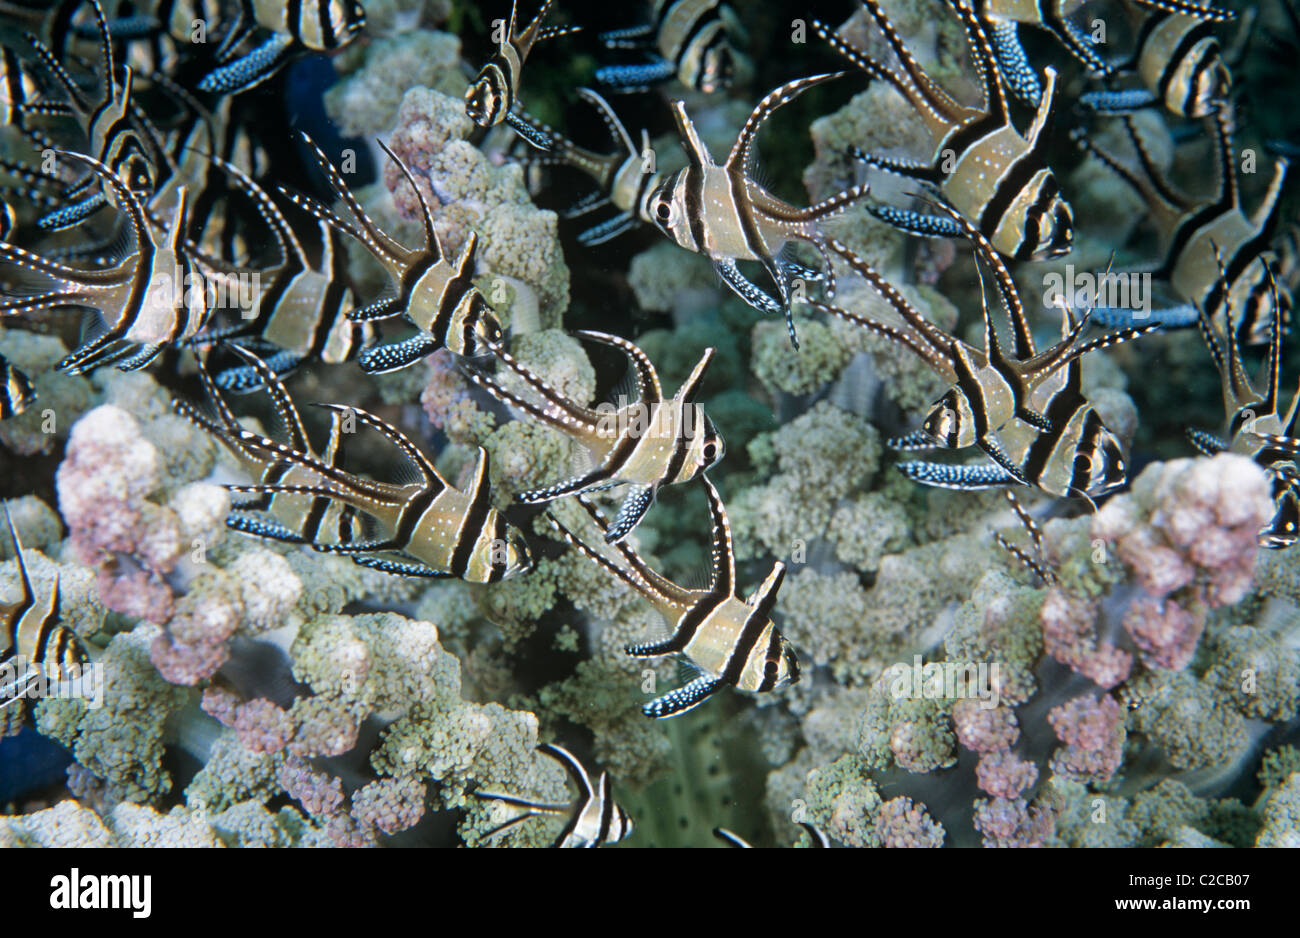 School of Banggai Cardinalfish, Pterapogon kauderni, in Branching Anemone, Actinodendron glomeratum, Lembeh Straits, near Bitung, Sulawesi, Indonesia Stock Photo